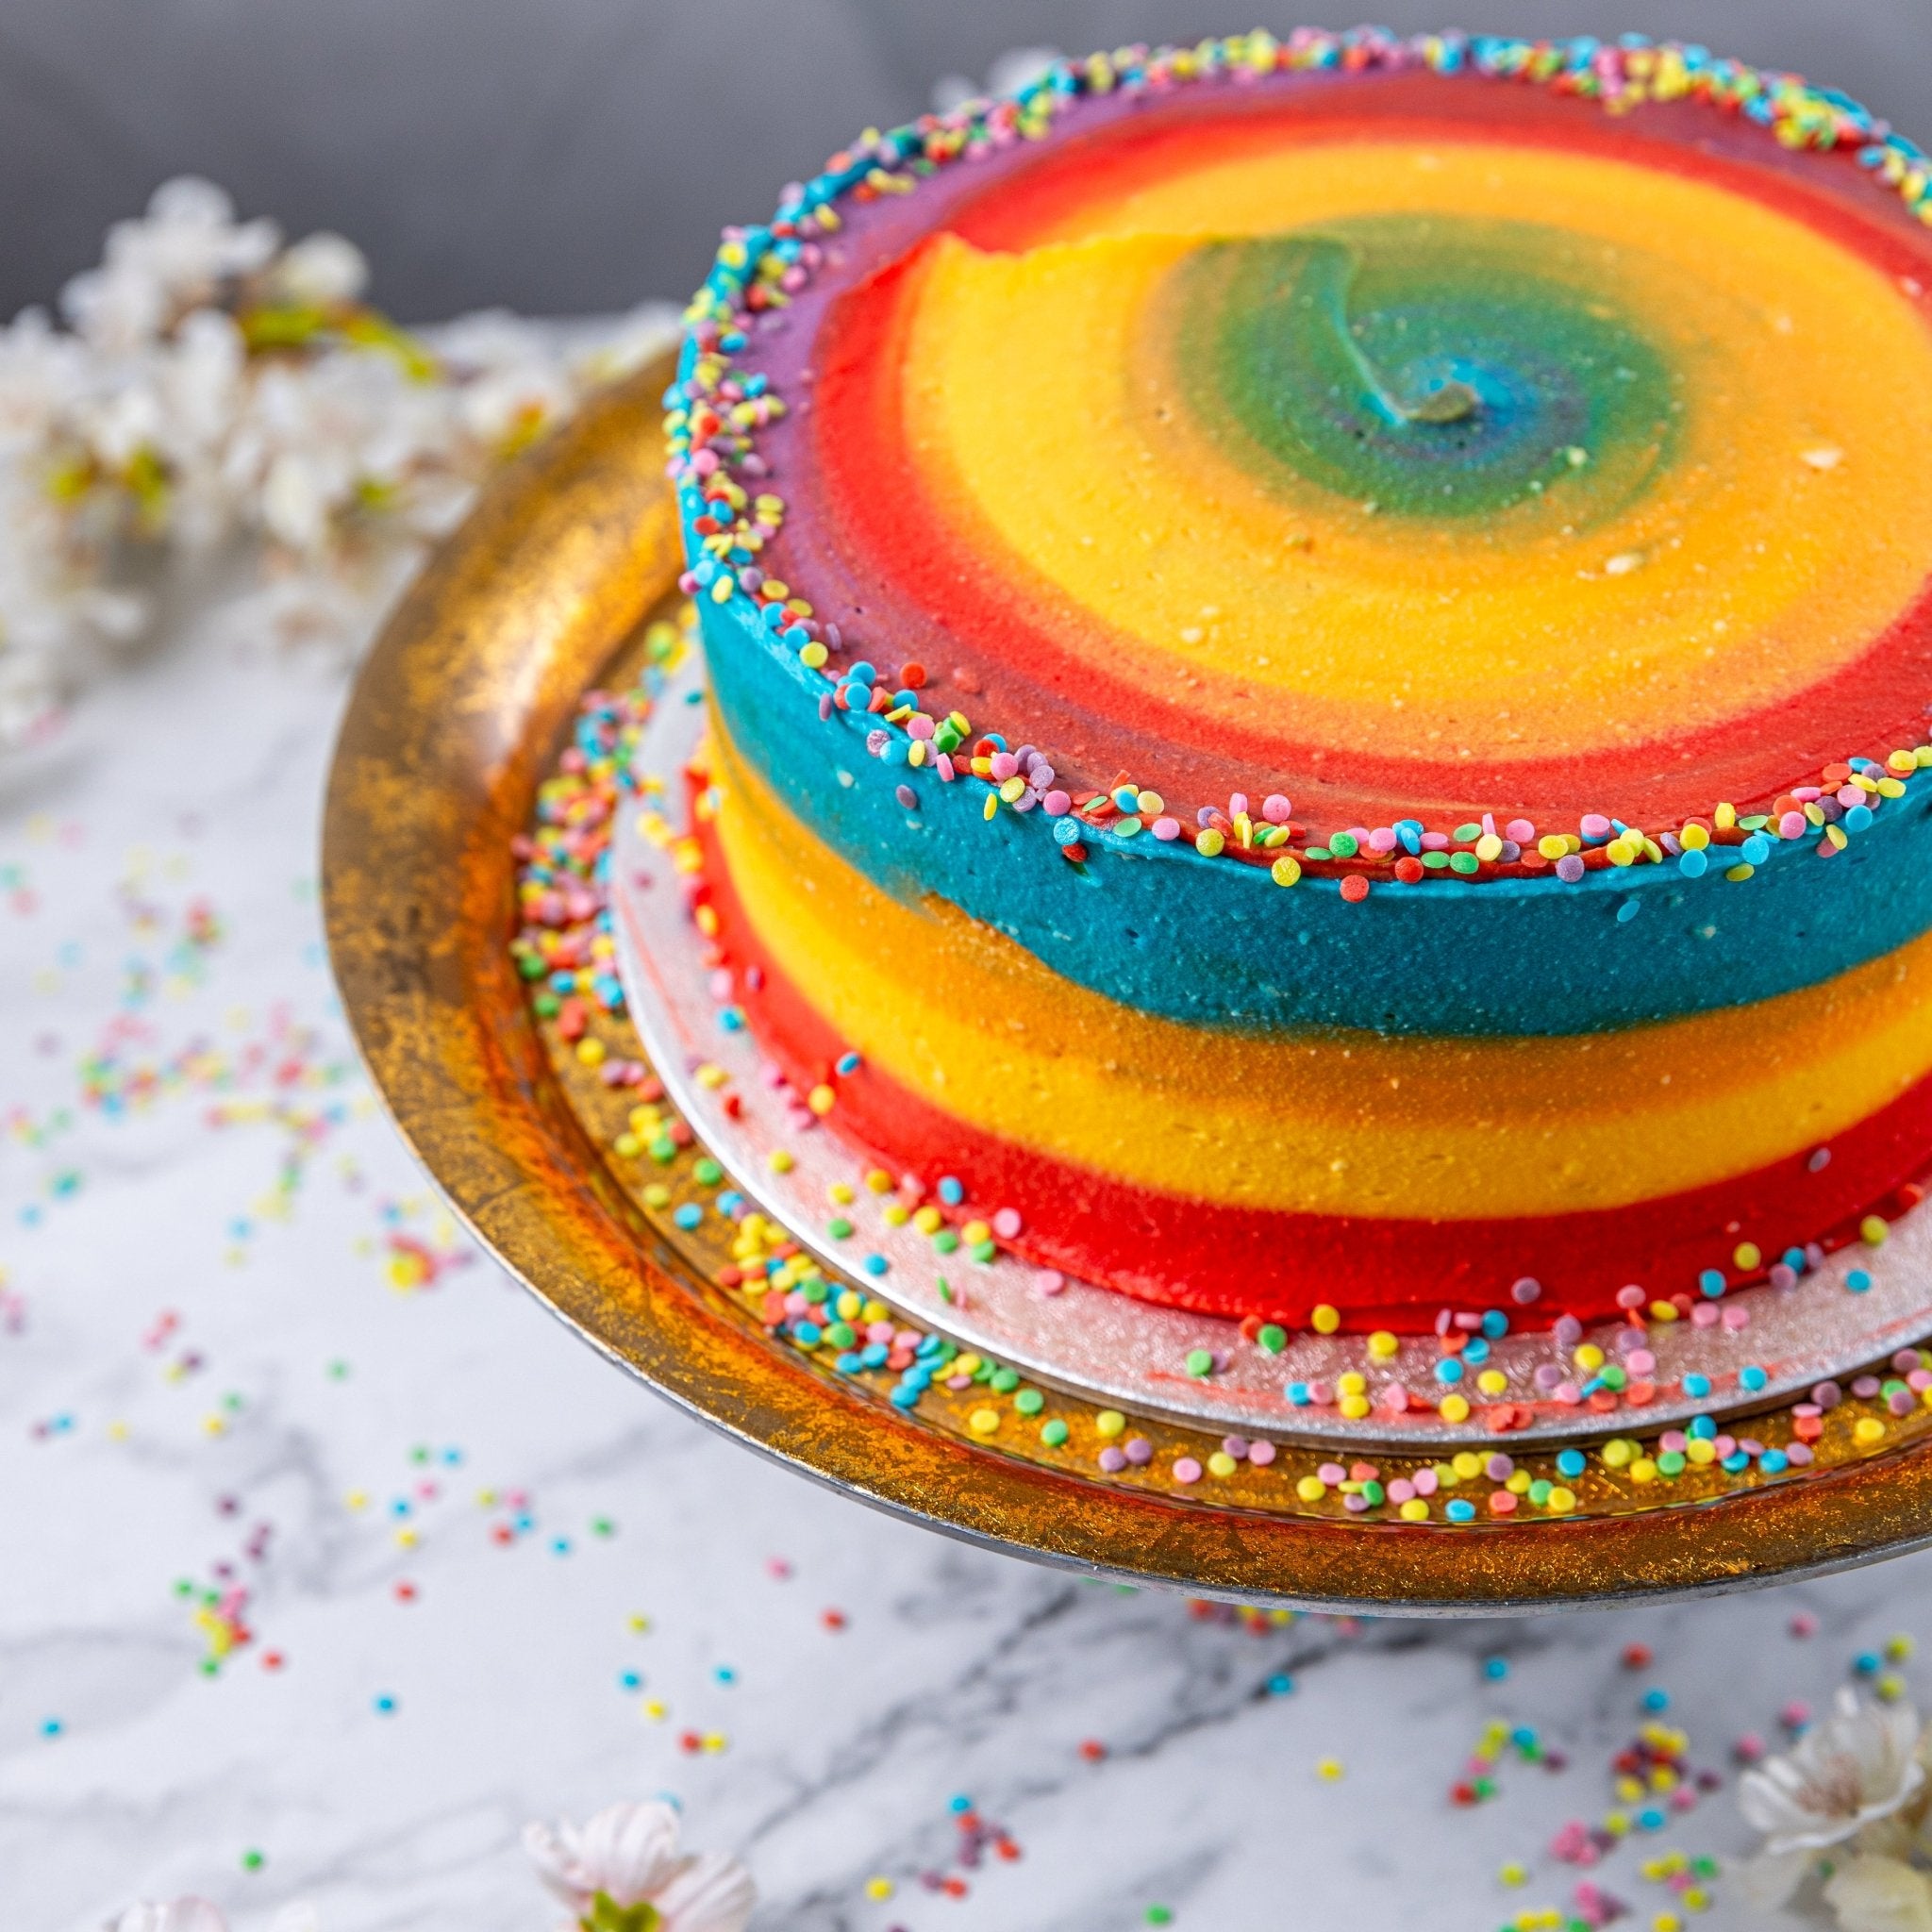 Rainbow Frosting Birthday Cake - Jack and Beyond